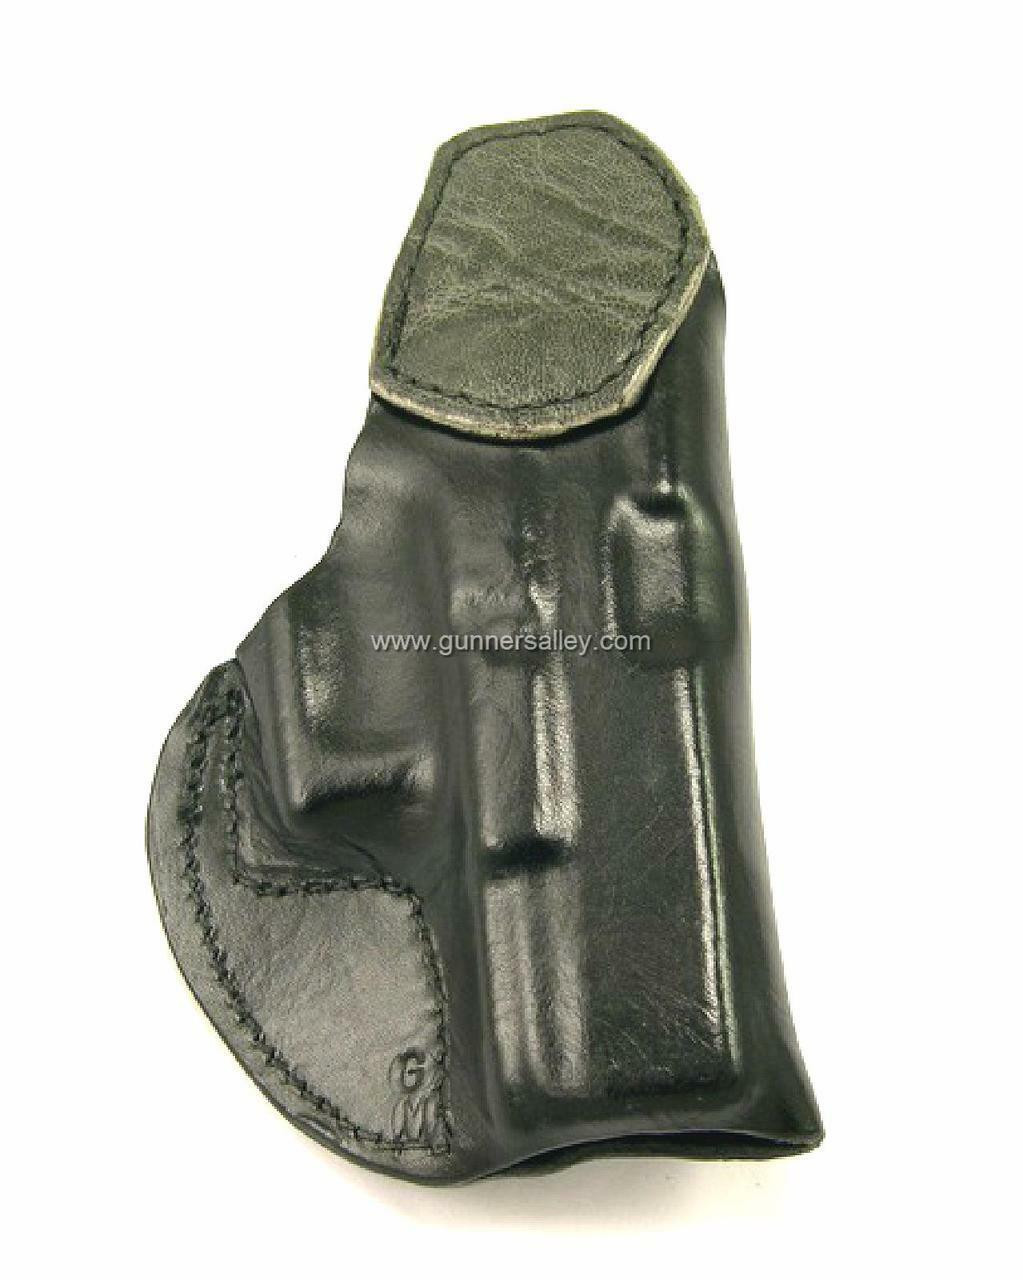 Black MTR Adversary for Glock 19 shown with OPTIONAL grey elephant trim